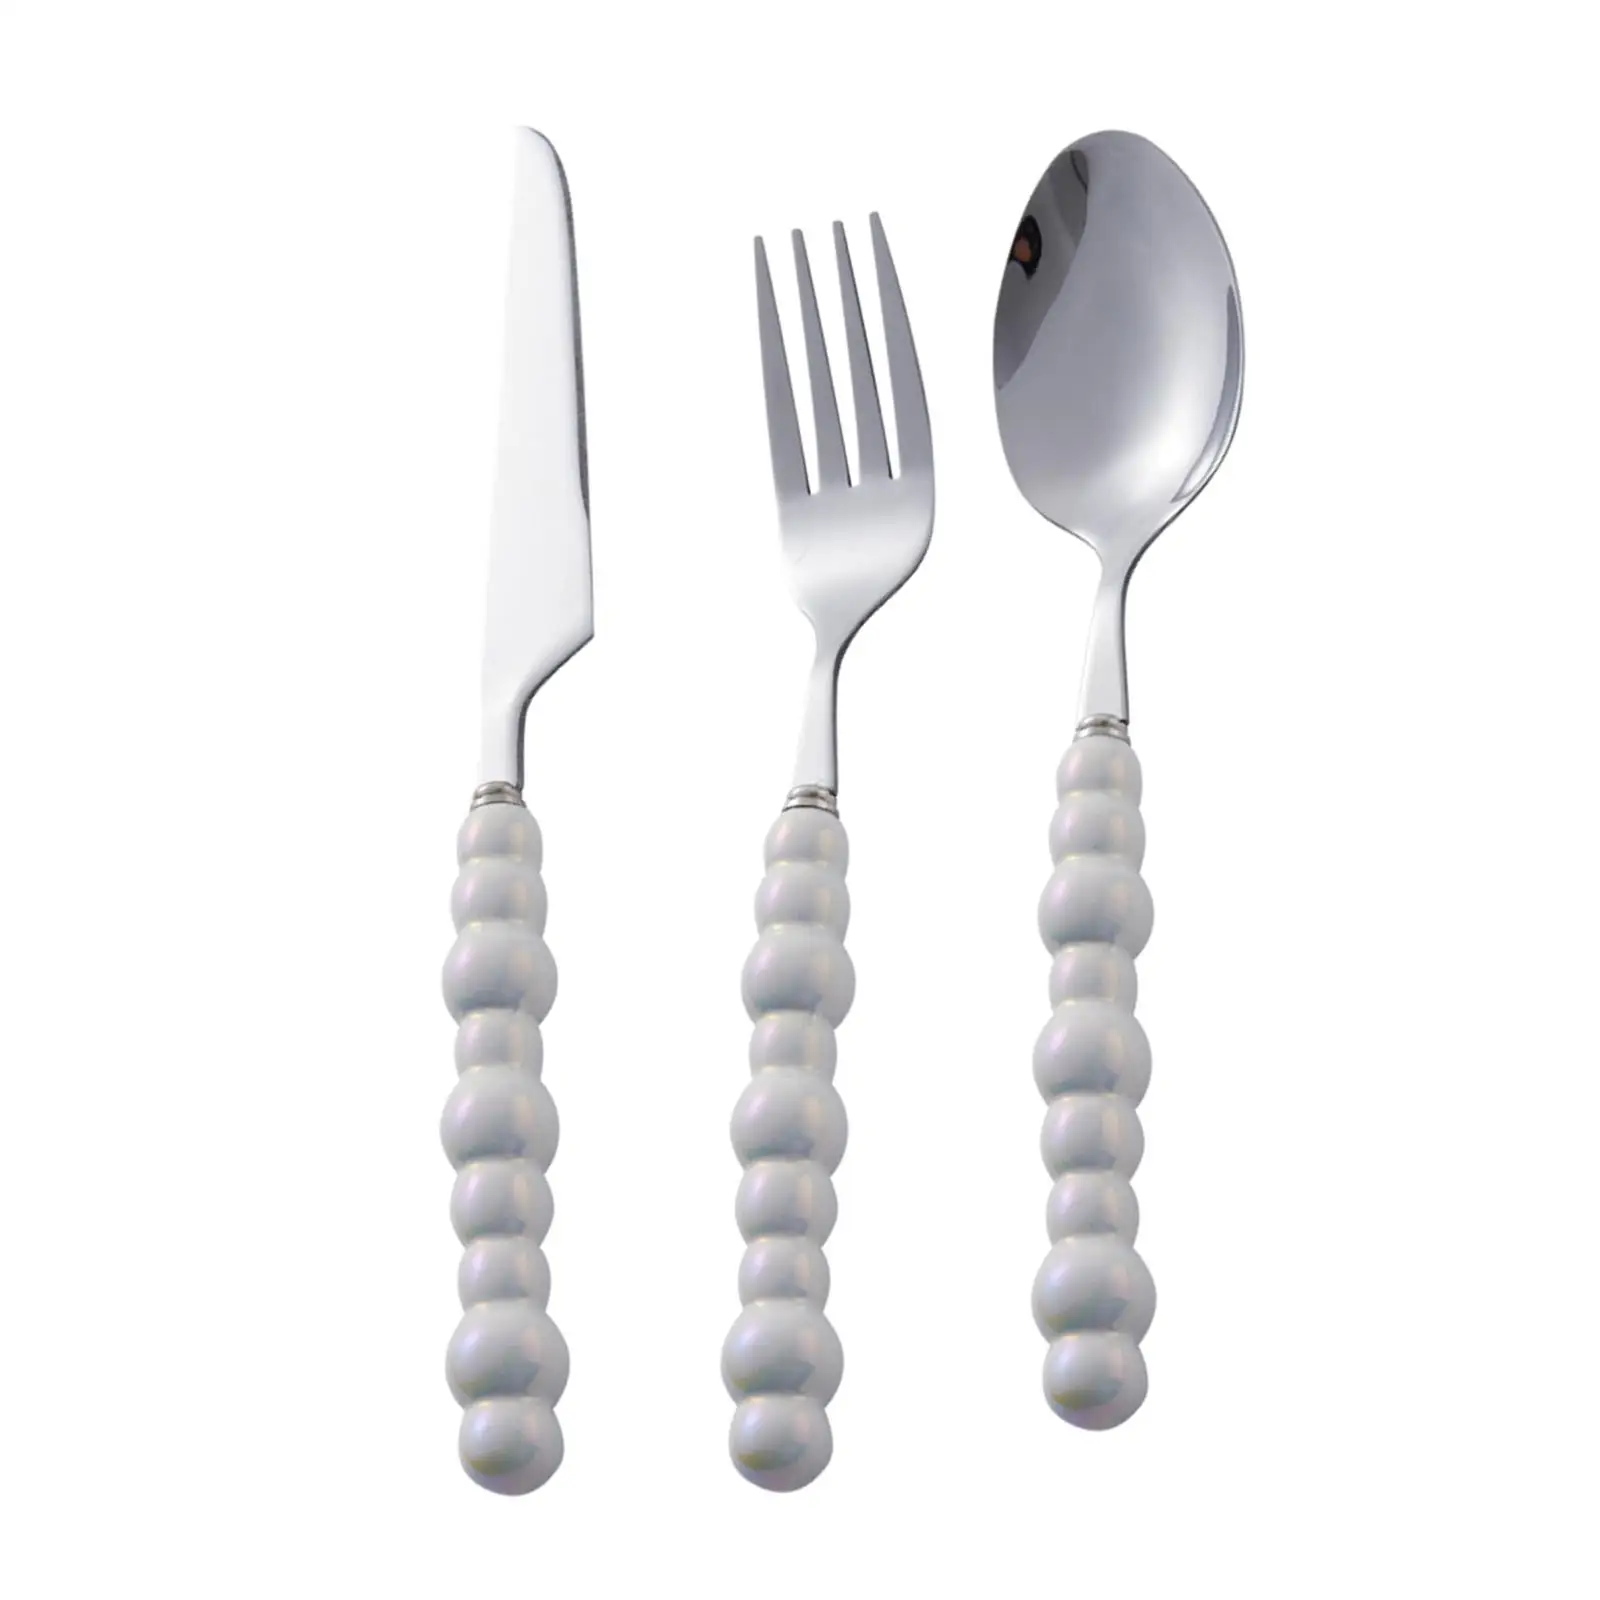 3 Pieces Silverware Set Luxury Kitchen Utensils Service Stainless Steel Flatware Cutlery Set for Holiday Home Restaurant Hotel